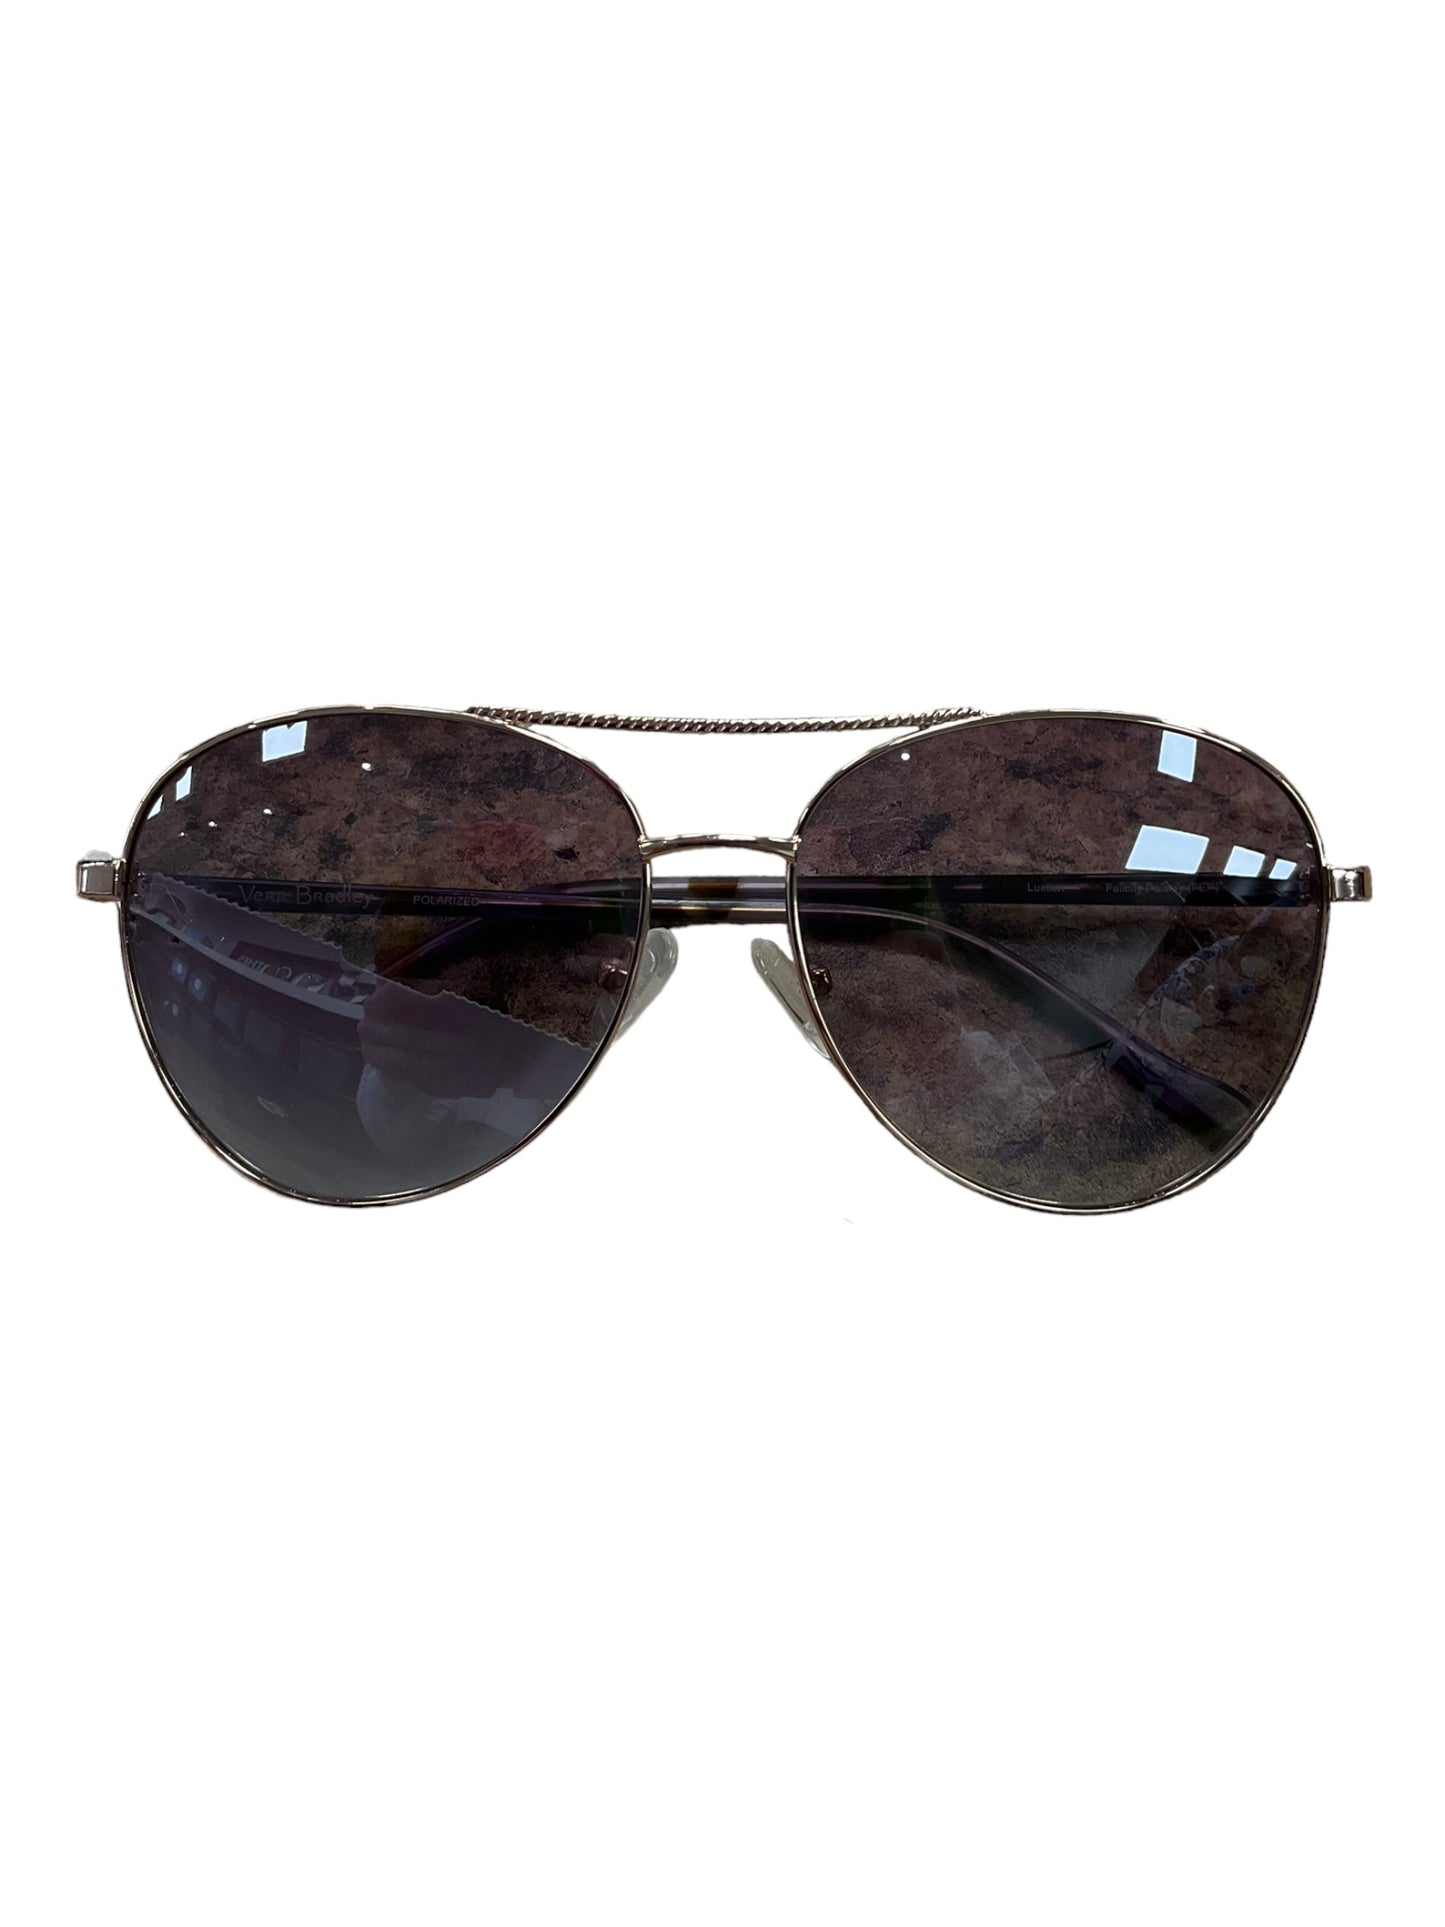 Sunglasses By Vera Bradley  Size: 02 Piece